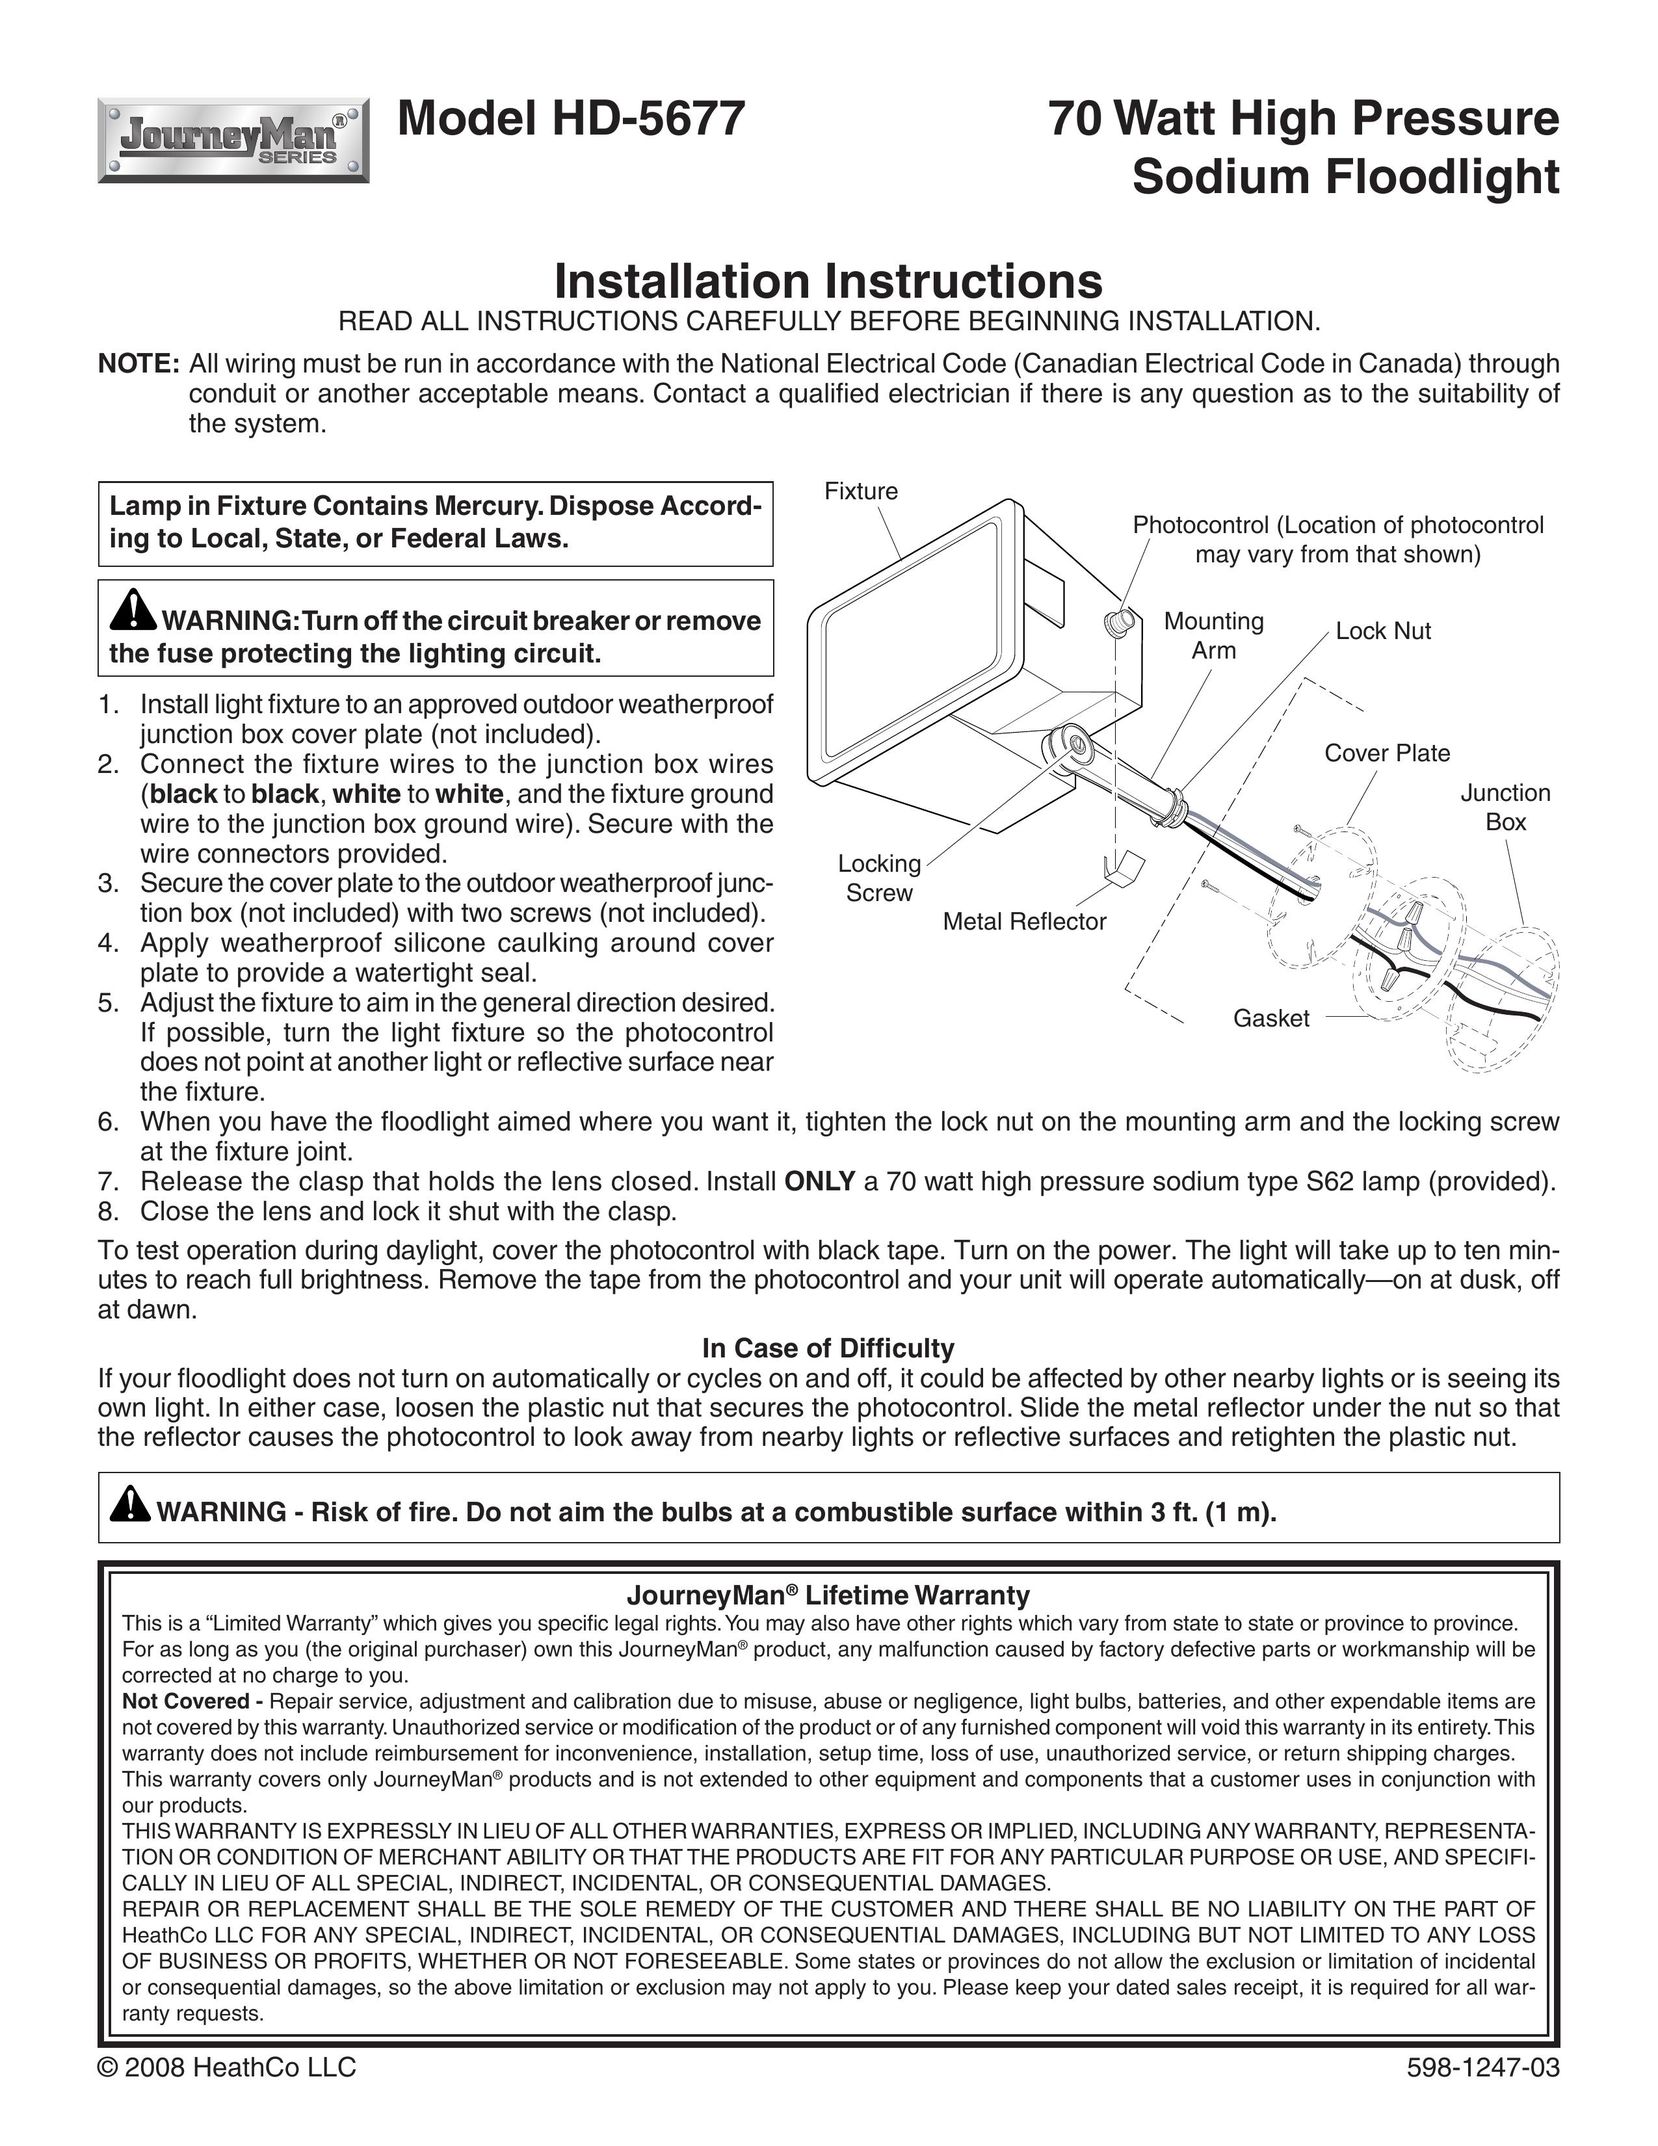 Heath Zenith HD-5677 Work Light User Manual